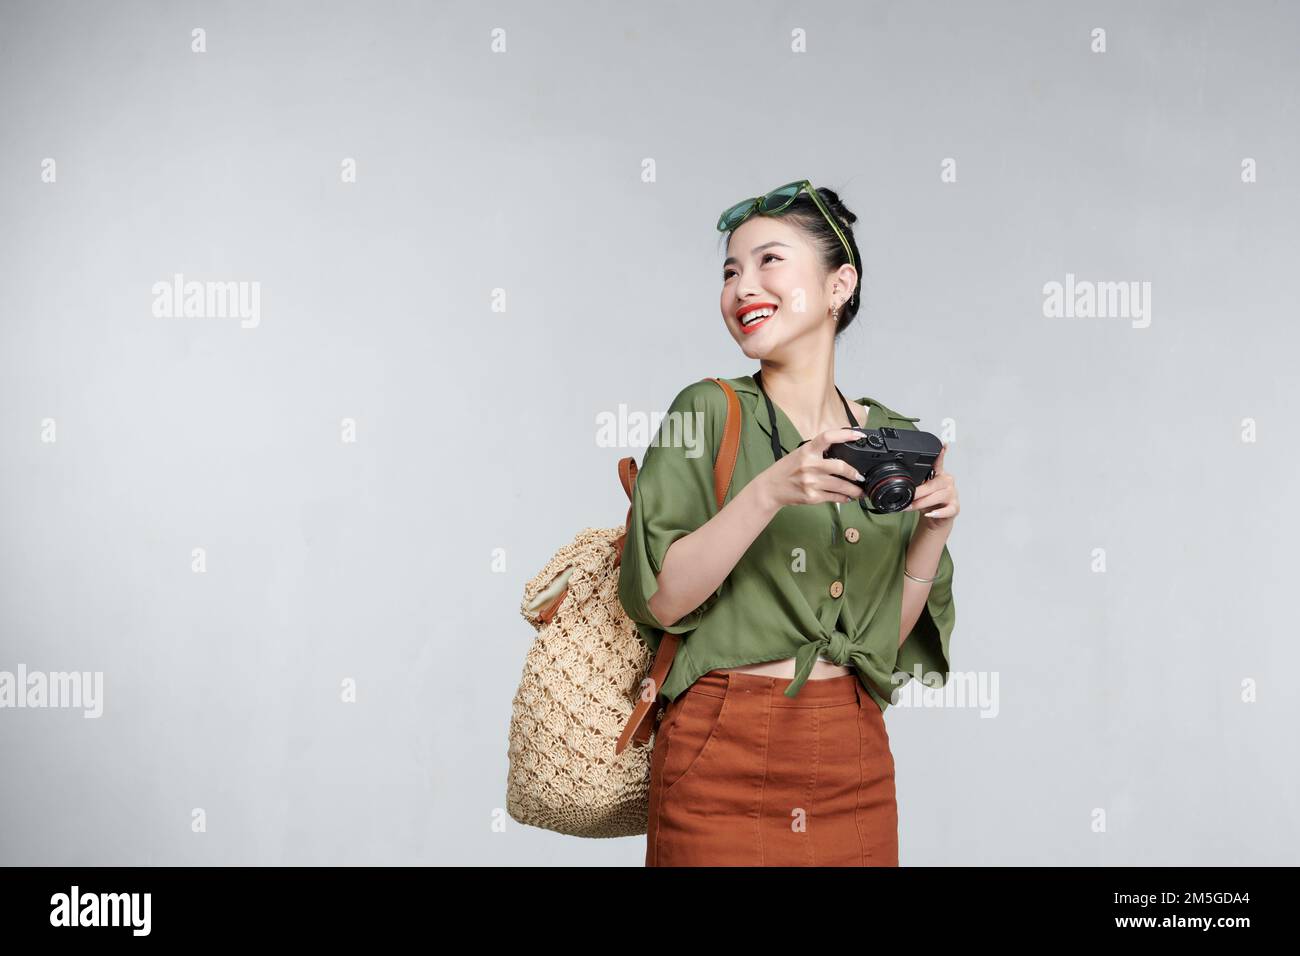 Image of joyful woman holding retro camera and smiling isolated over gray background Stock Photo